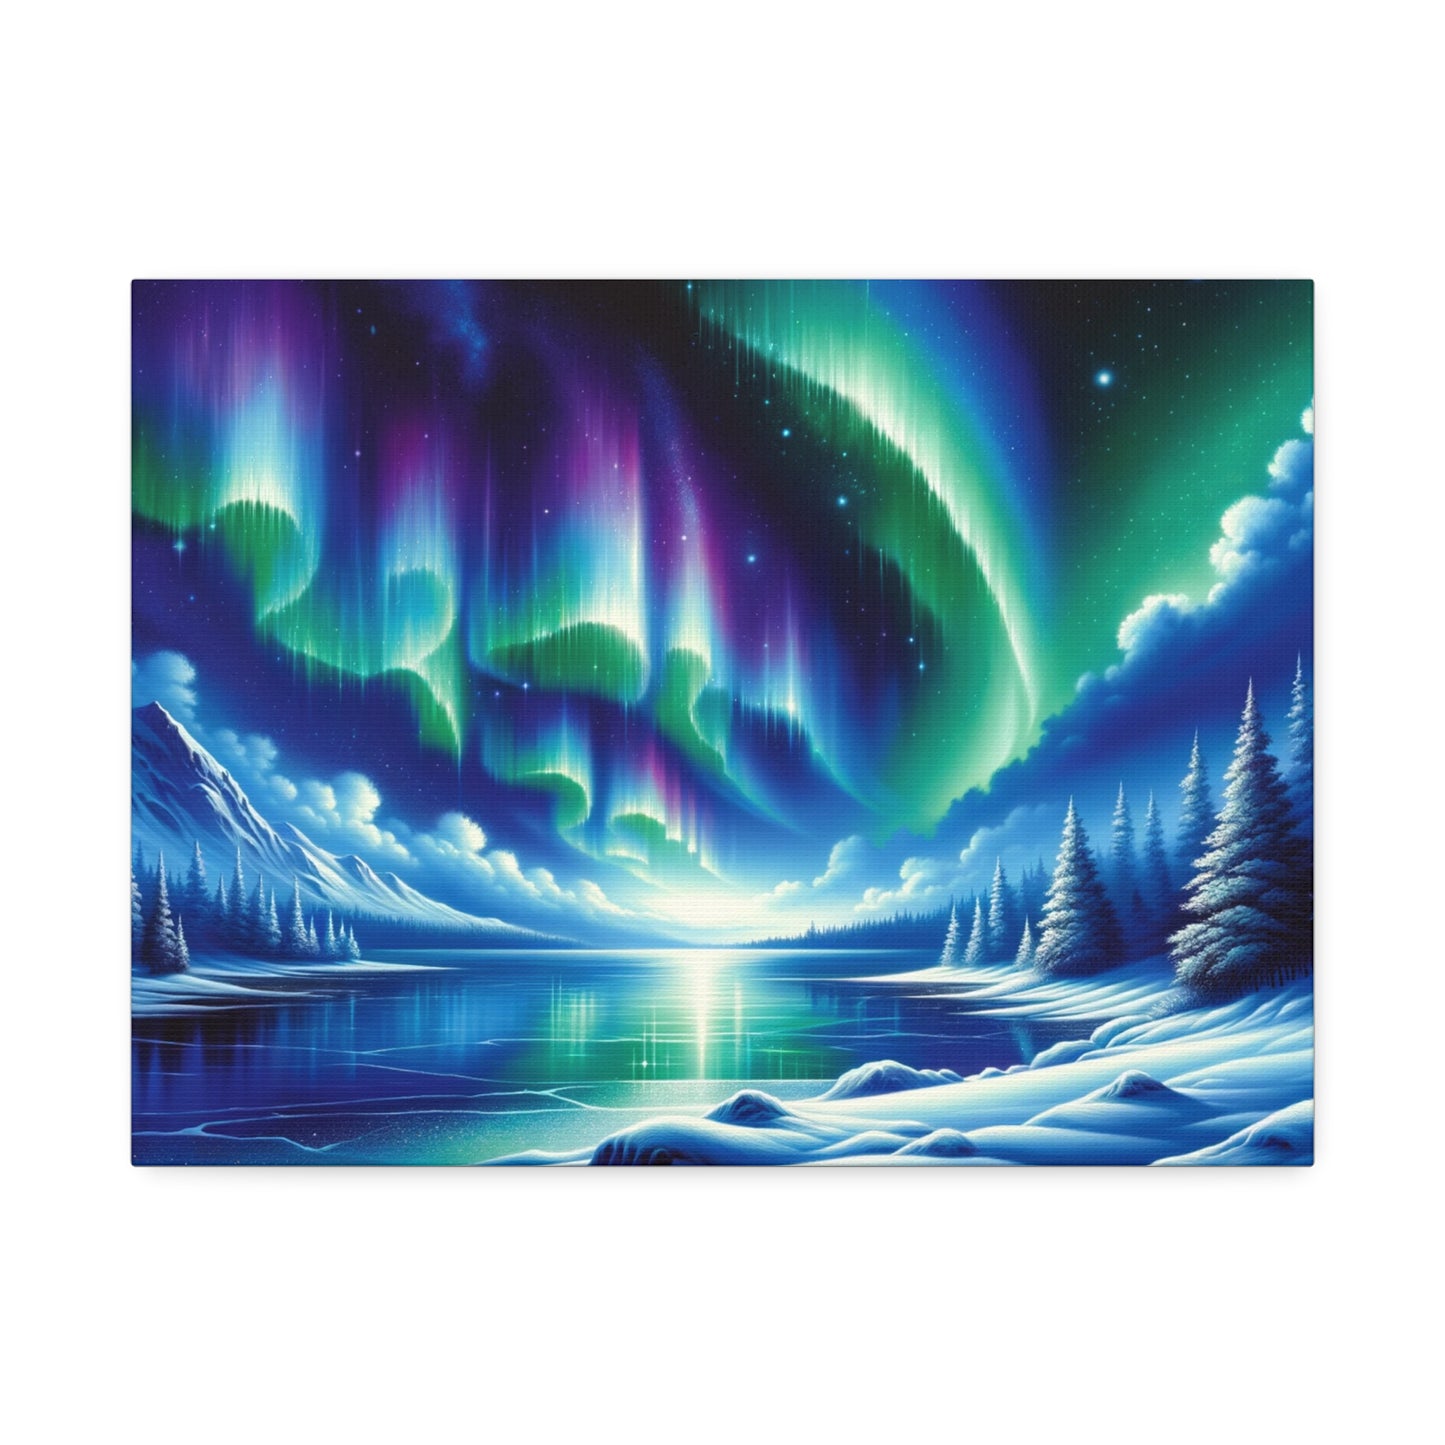 Aurora Dreams: Enchanting Northern Lights Canvas Art